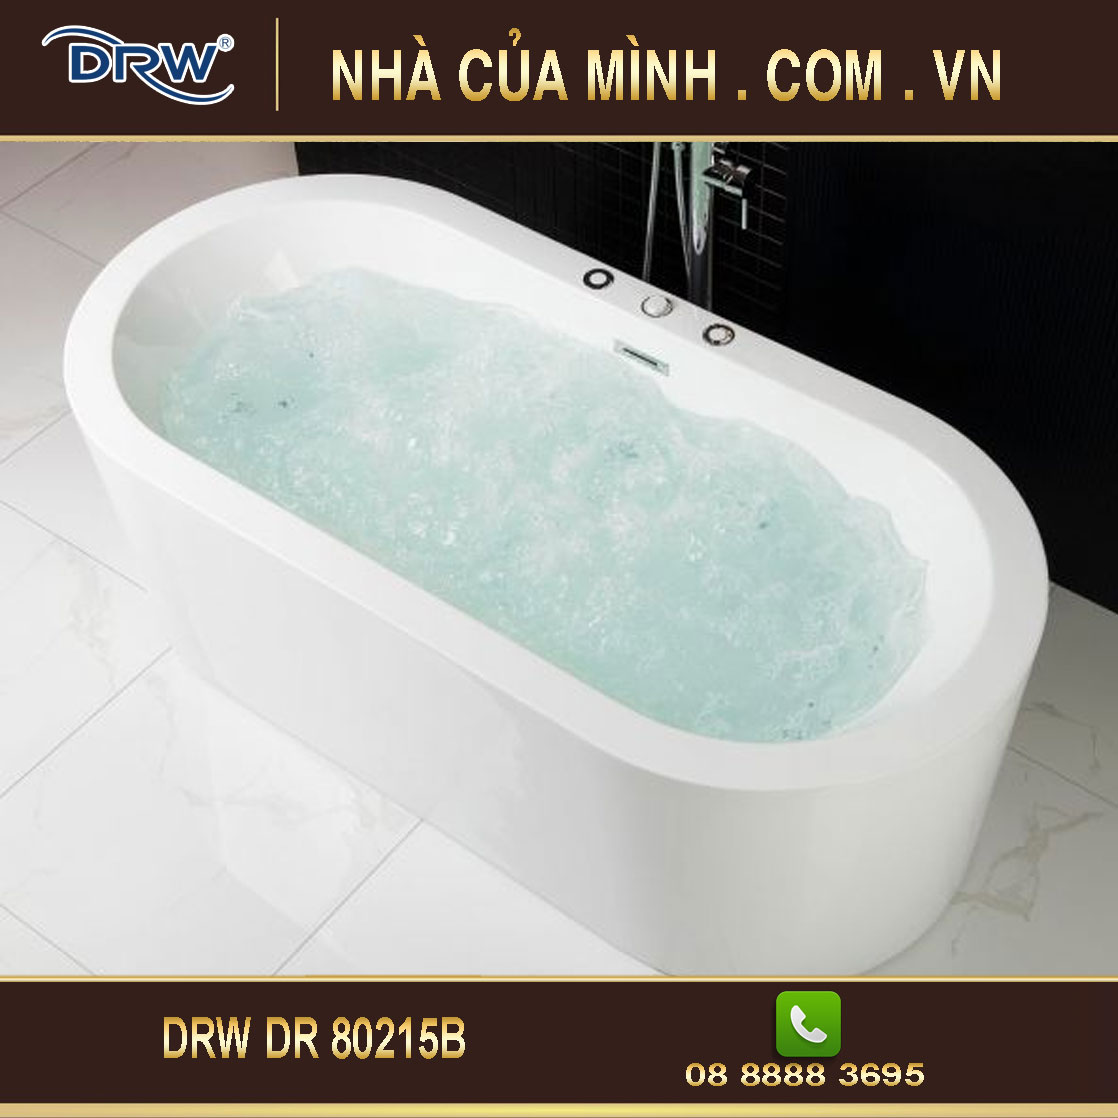 Bồn tắm Massage DRW DR 80215B